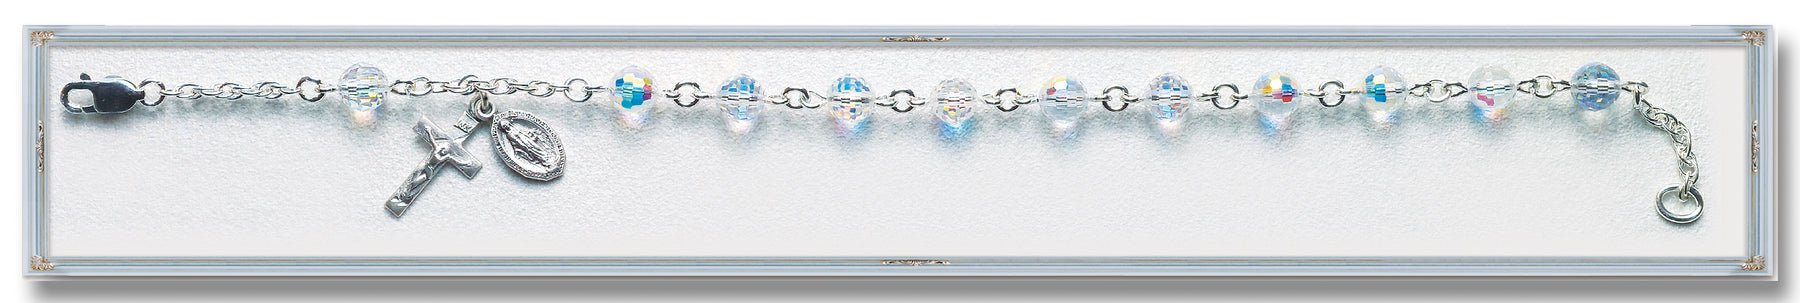 Aurora Multi Faceted Swarovski Crystal Bracelet